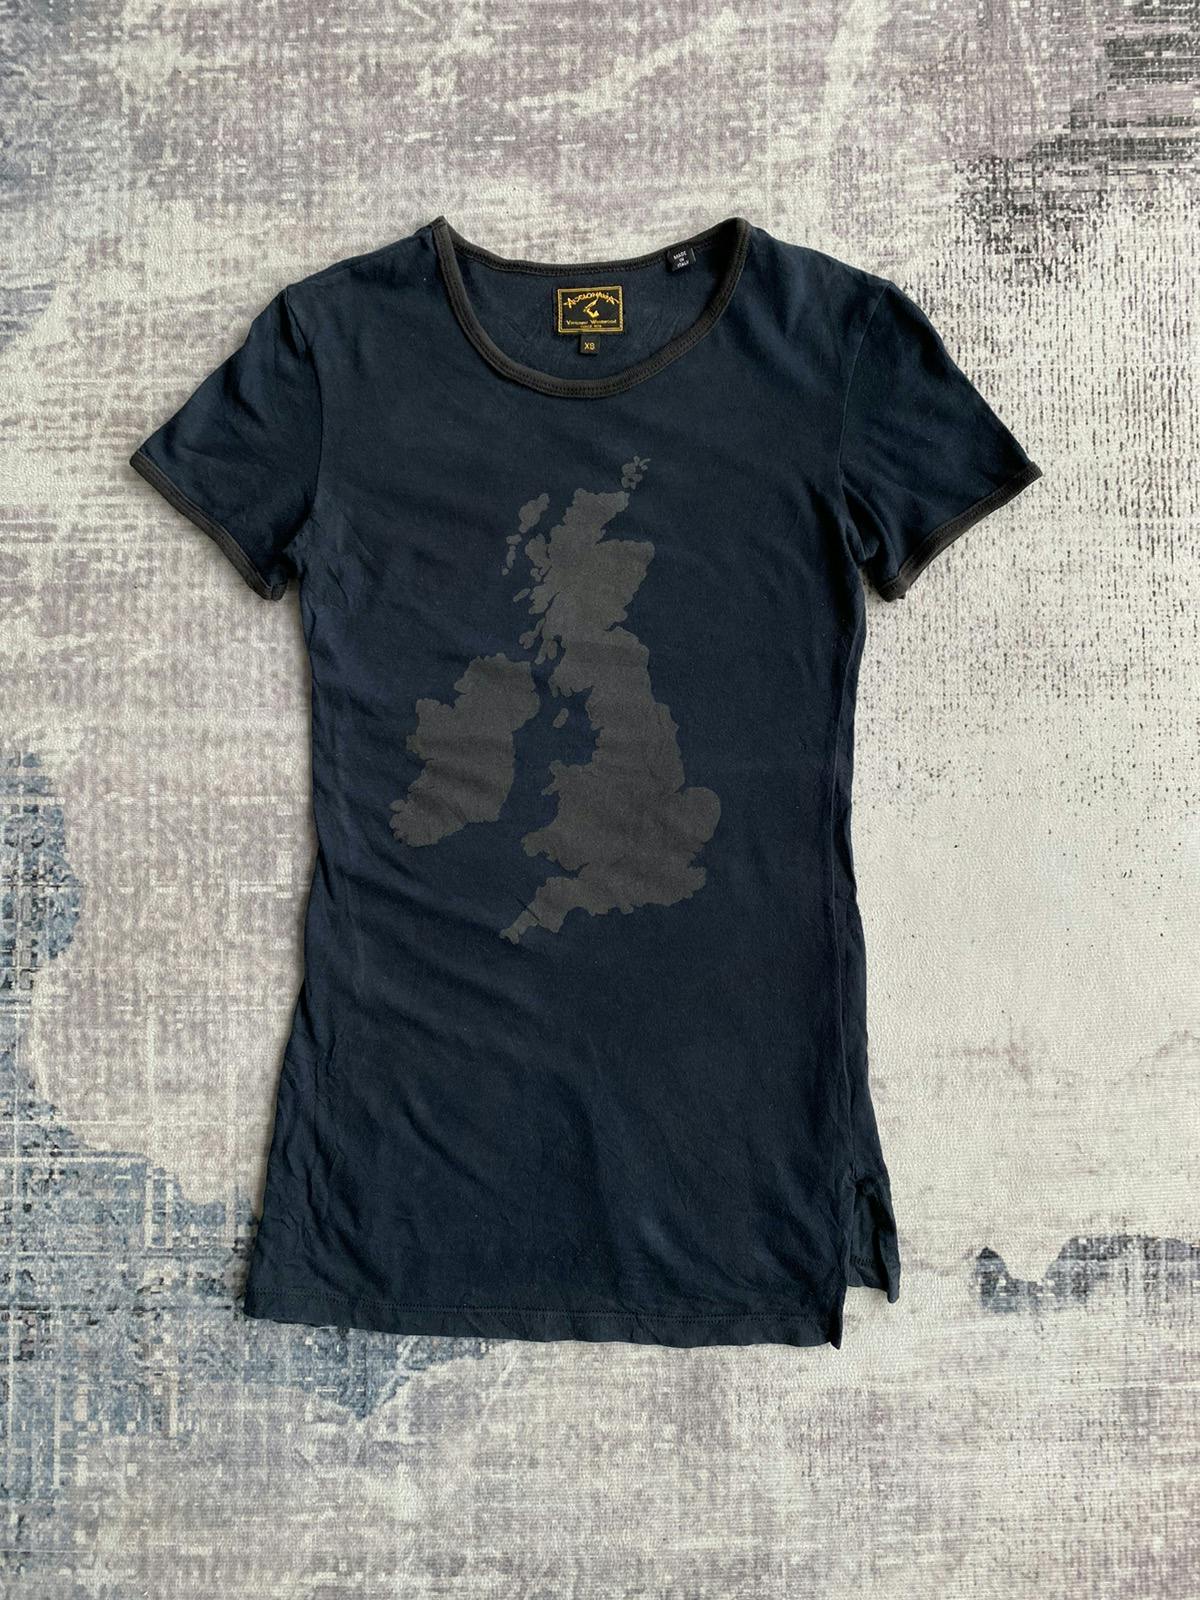 Vivienne Westwood Anglomania Shirt - 1